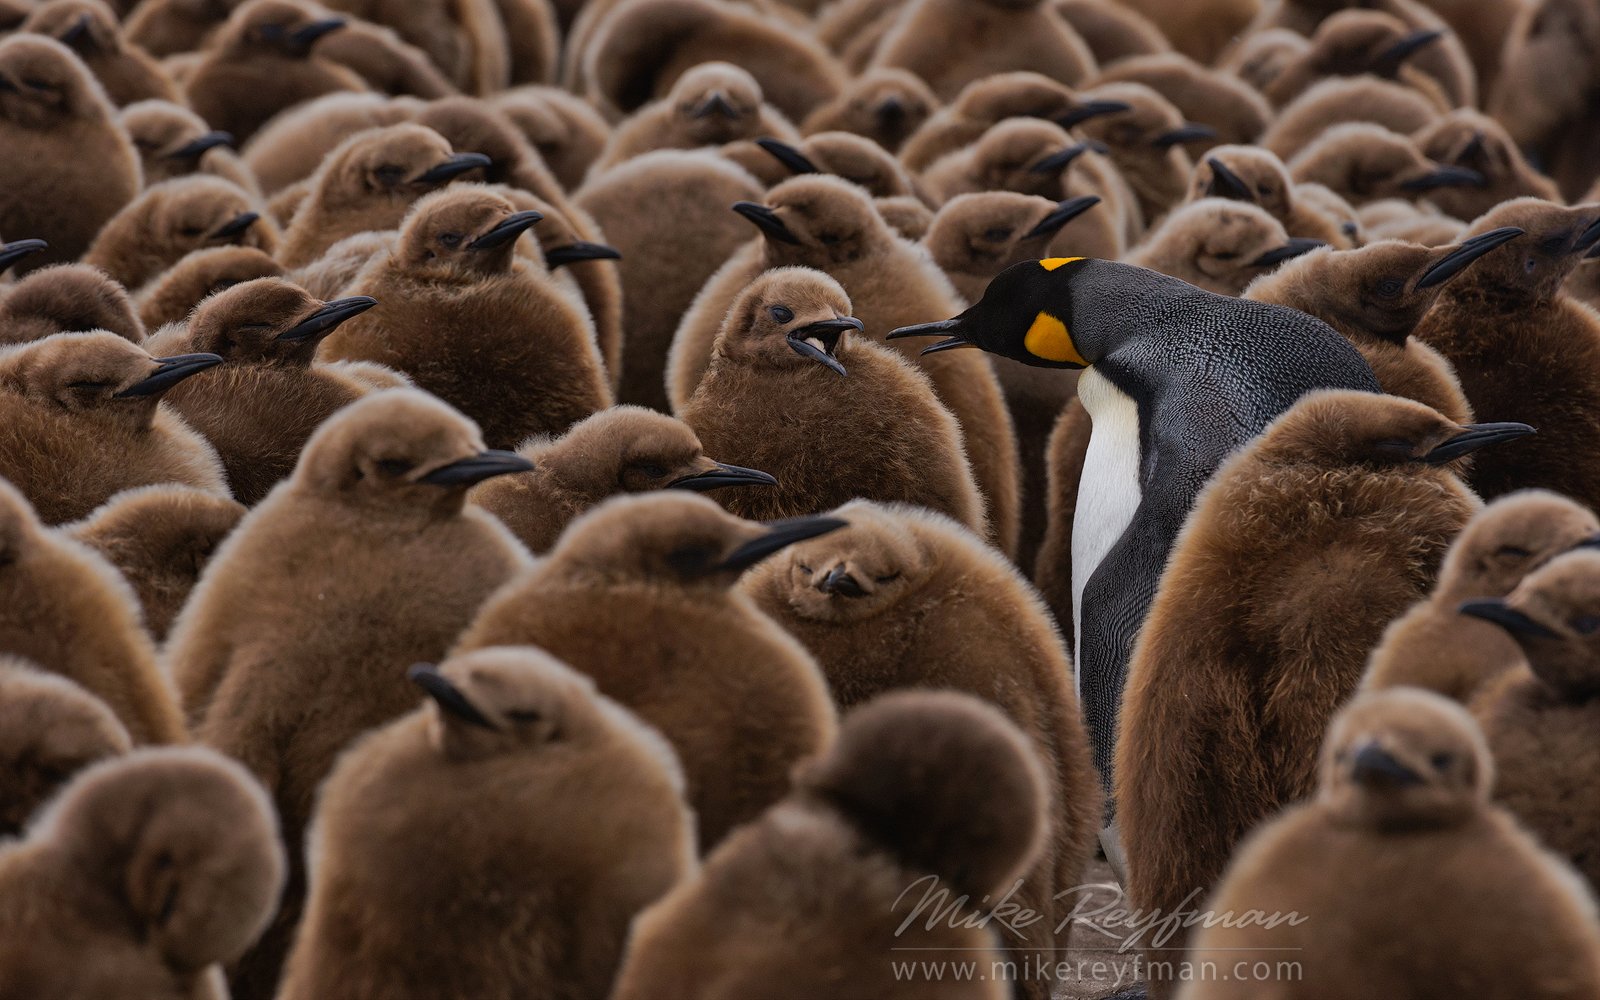 salisbury, plain king penguins south georgia sub-antarctic, Майк Рейфман